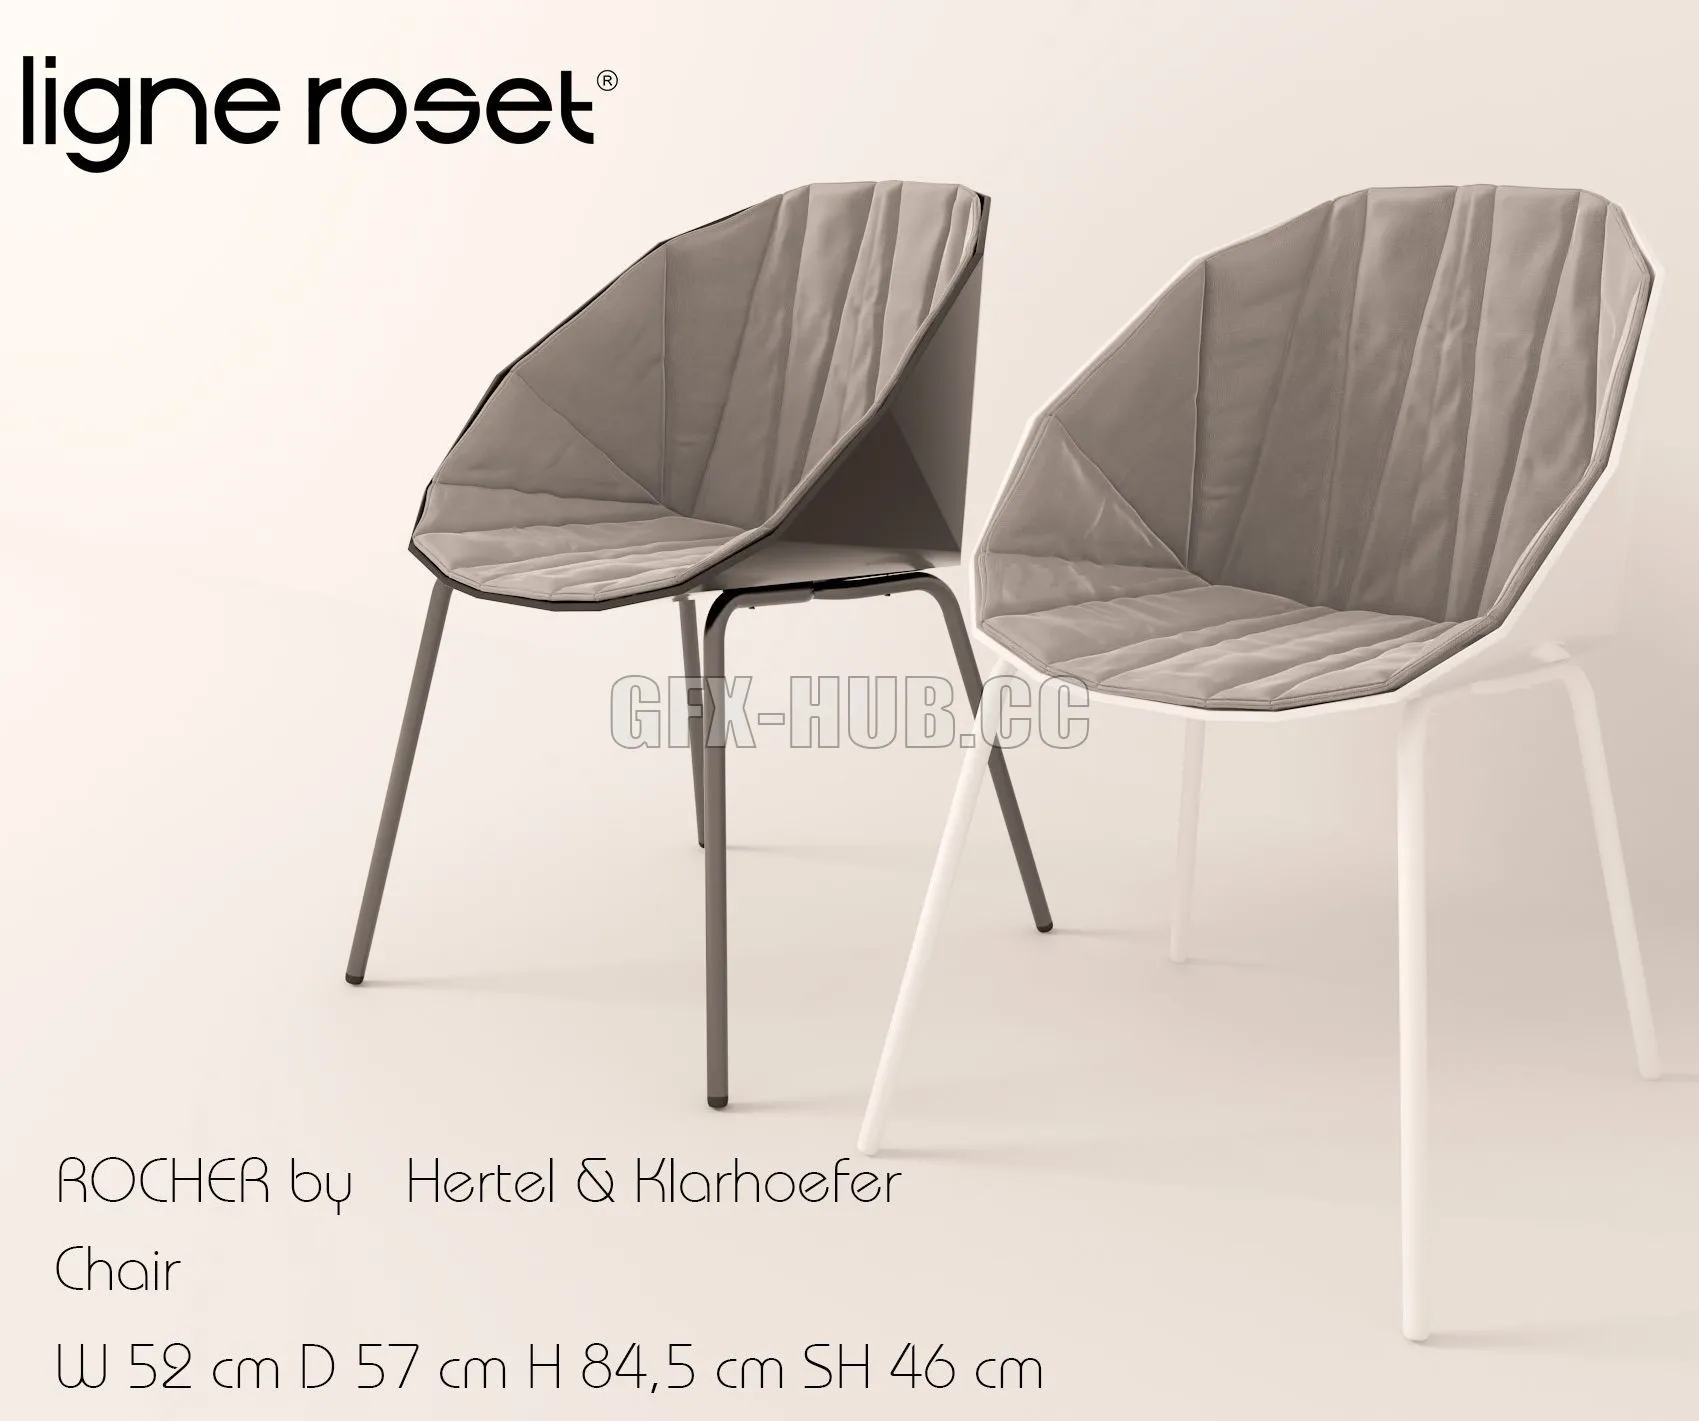 Rocher chair by Ligne Roset – 224065